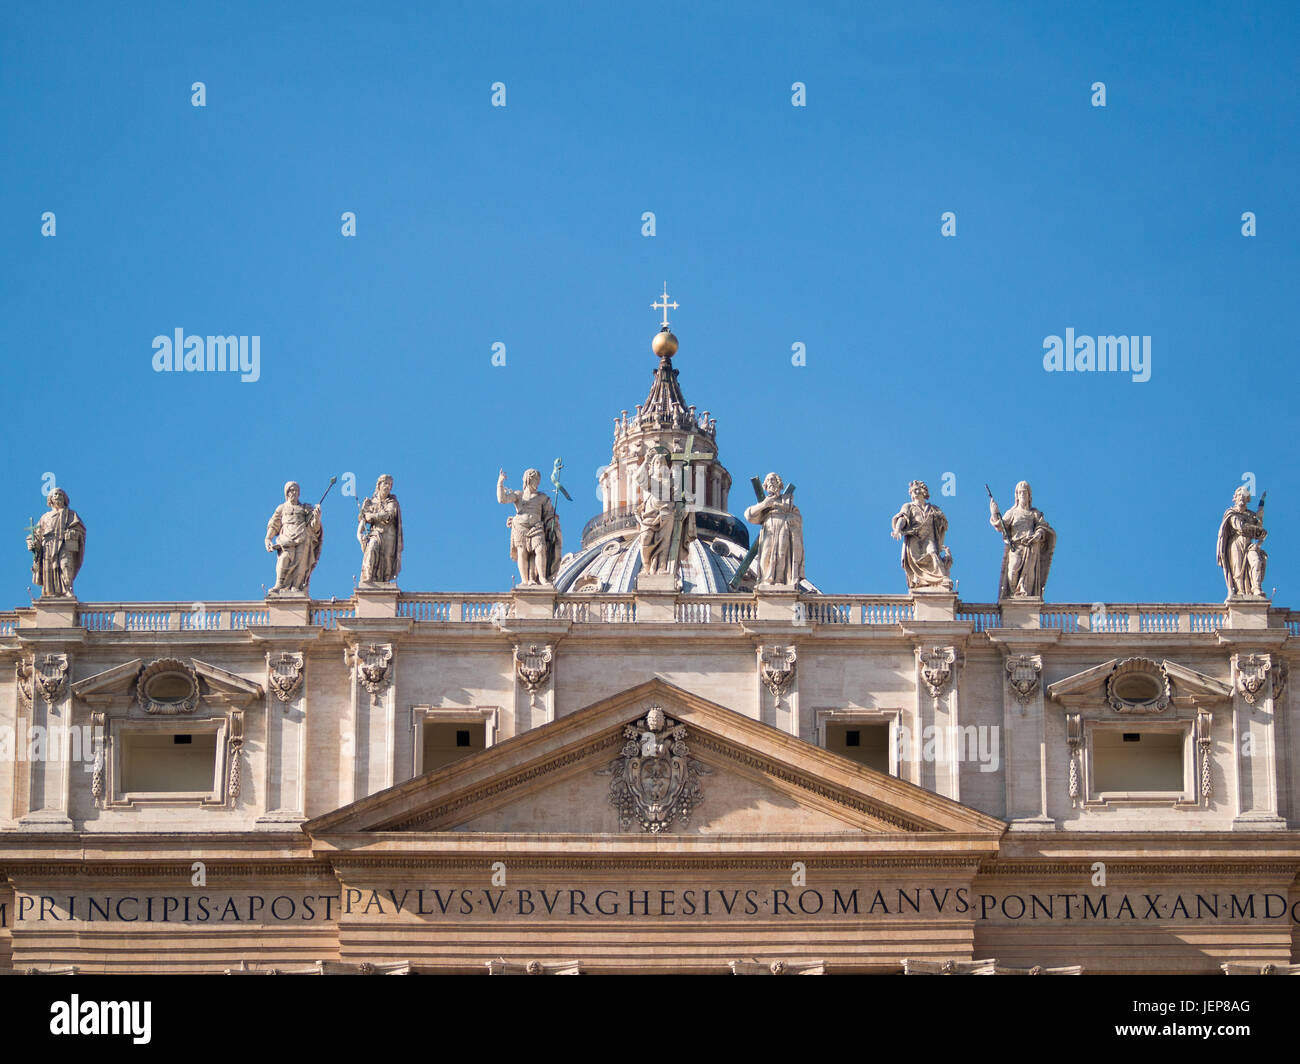 St. Peter's Basilica facade pediment Stock Photo